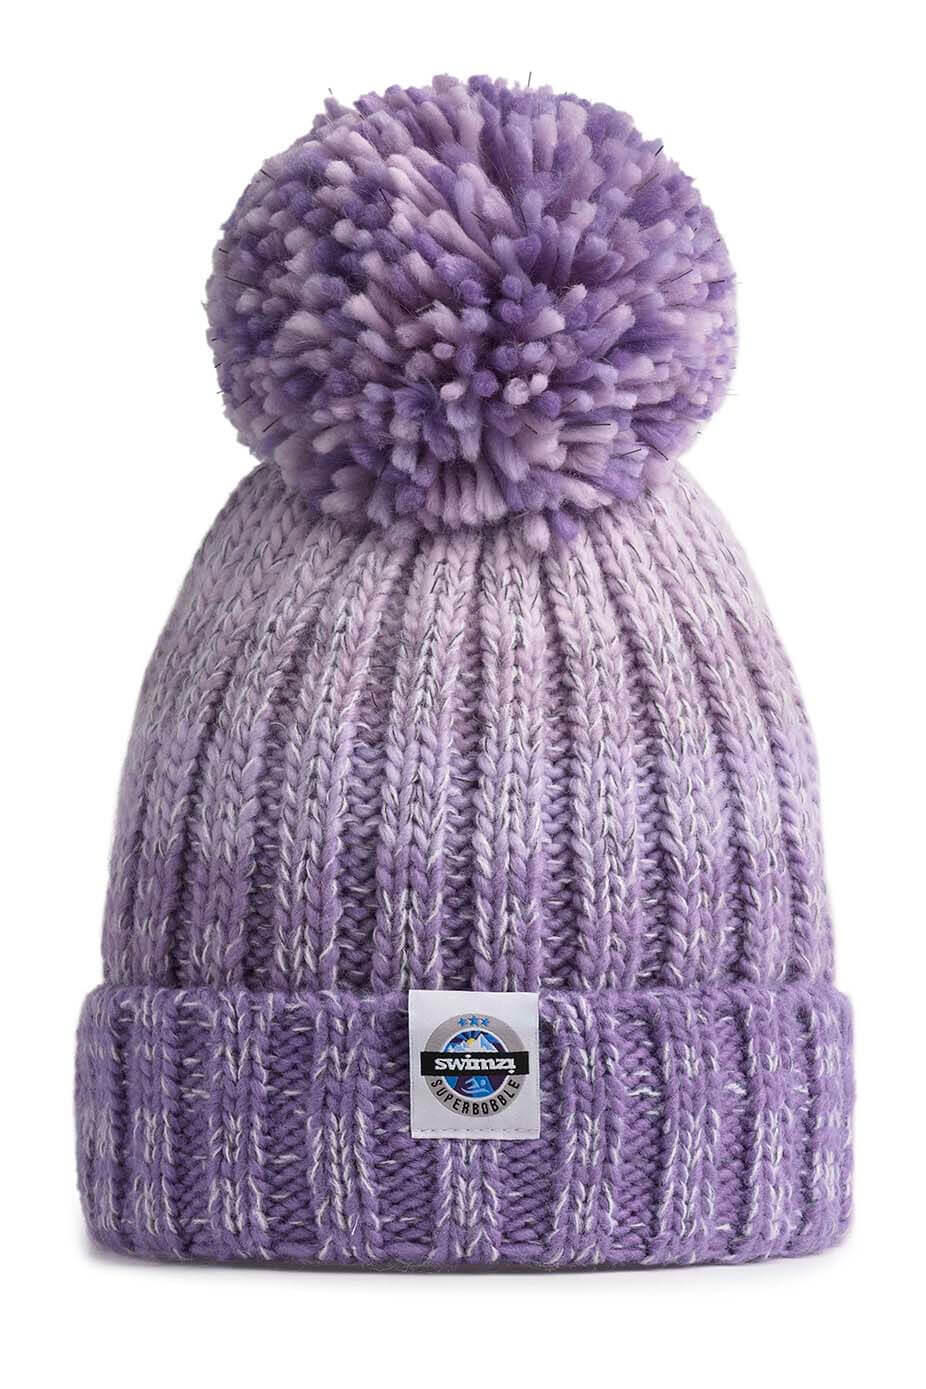 Lavender Gradient Reflective Superbobble Hat 1/3